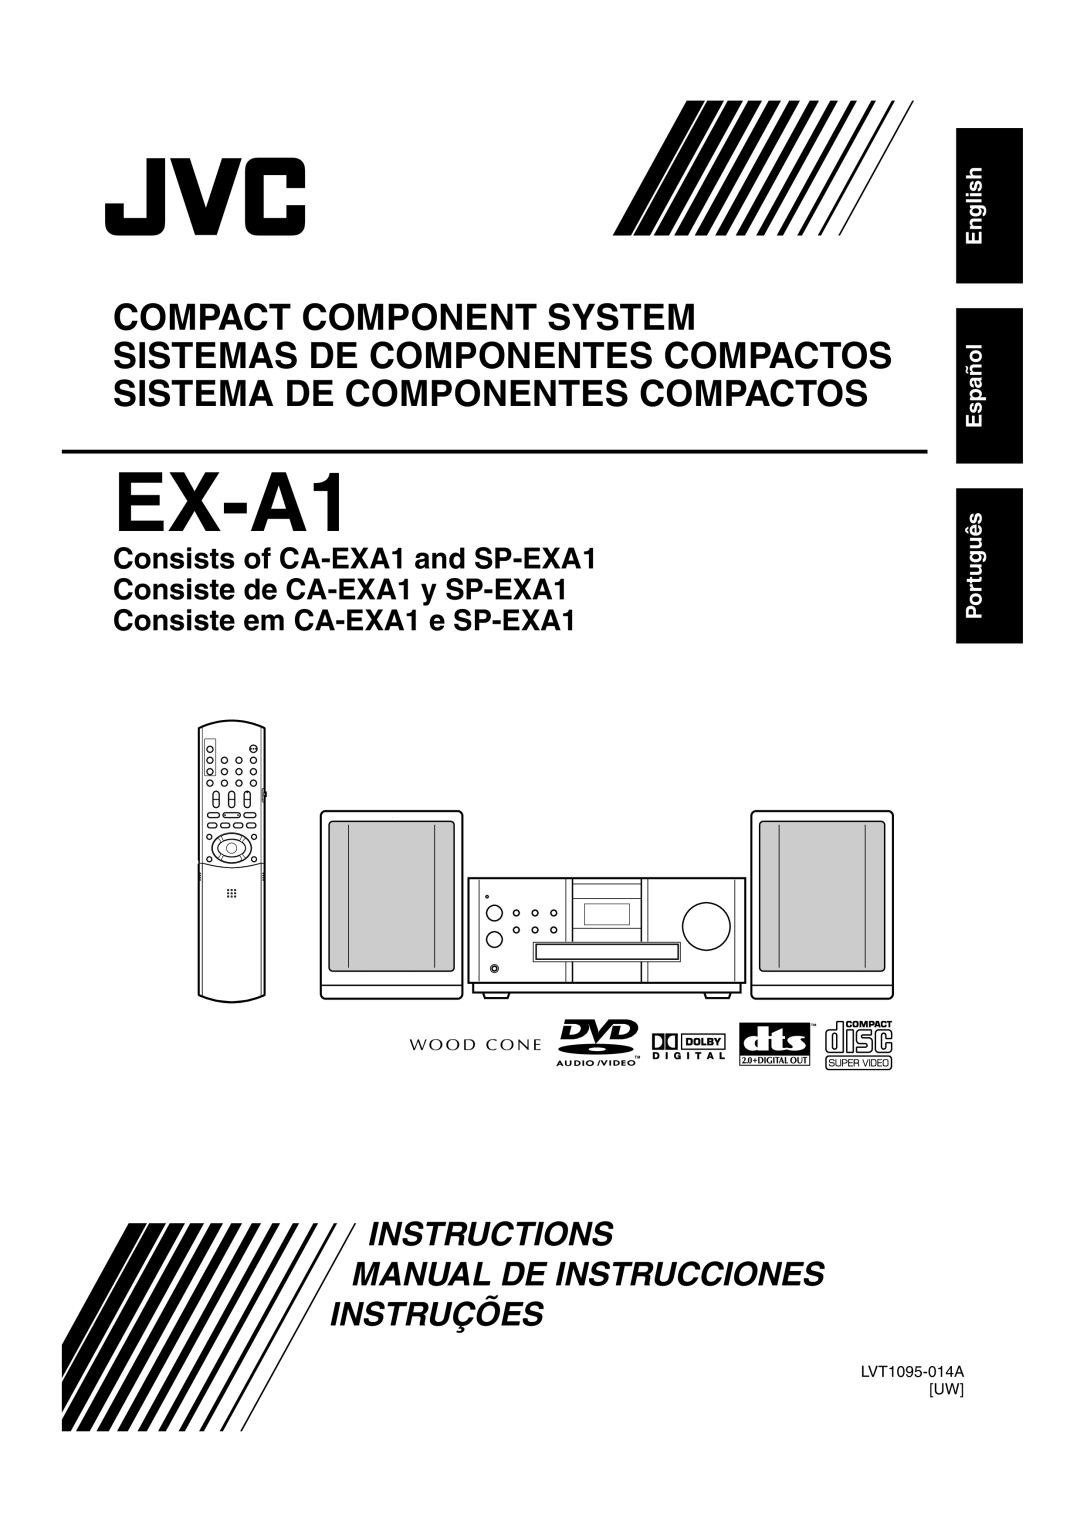 JVC EX-A1 manual Instructions Manual De Instrucciones Instruções, English Español Português, Consists of CA-EXA1and SP-EXA1 